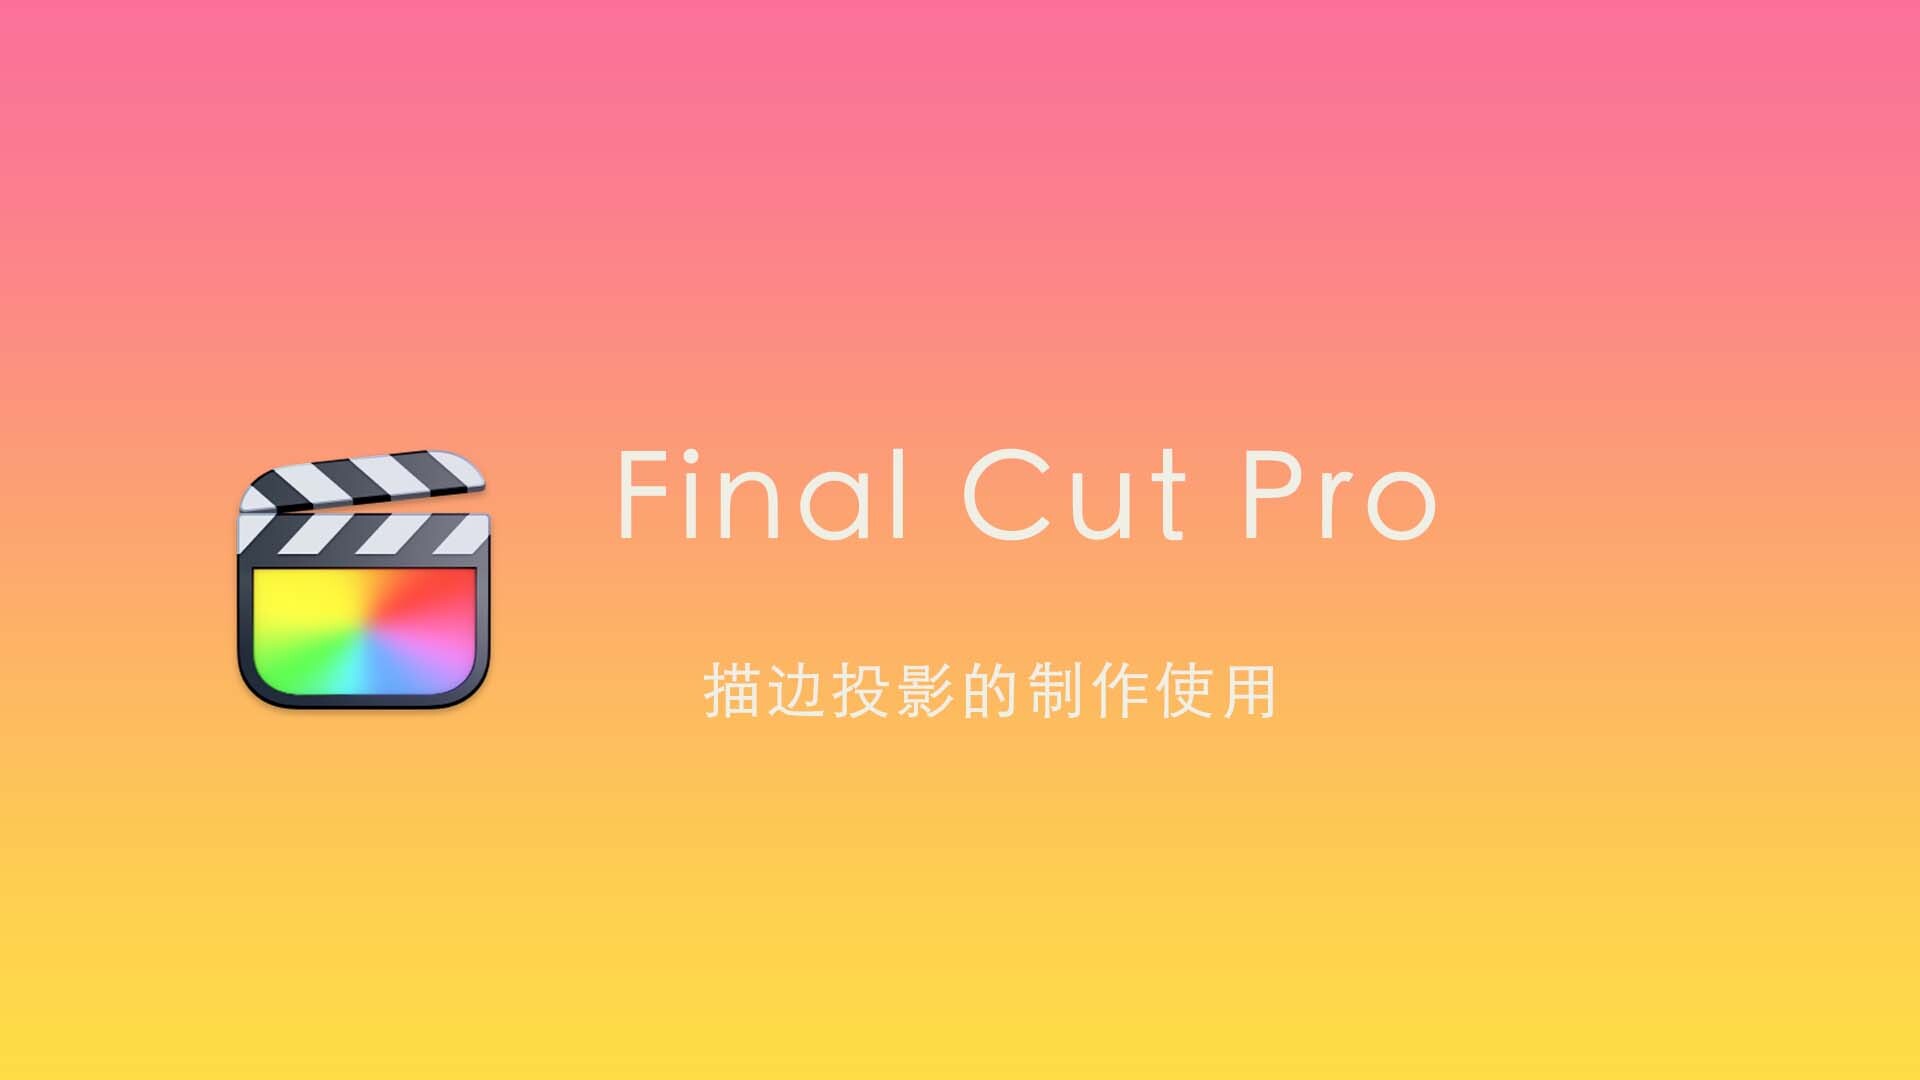 Final Cut Pro中文新手教程 (56) 描边投影的制作及使用